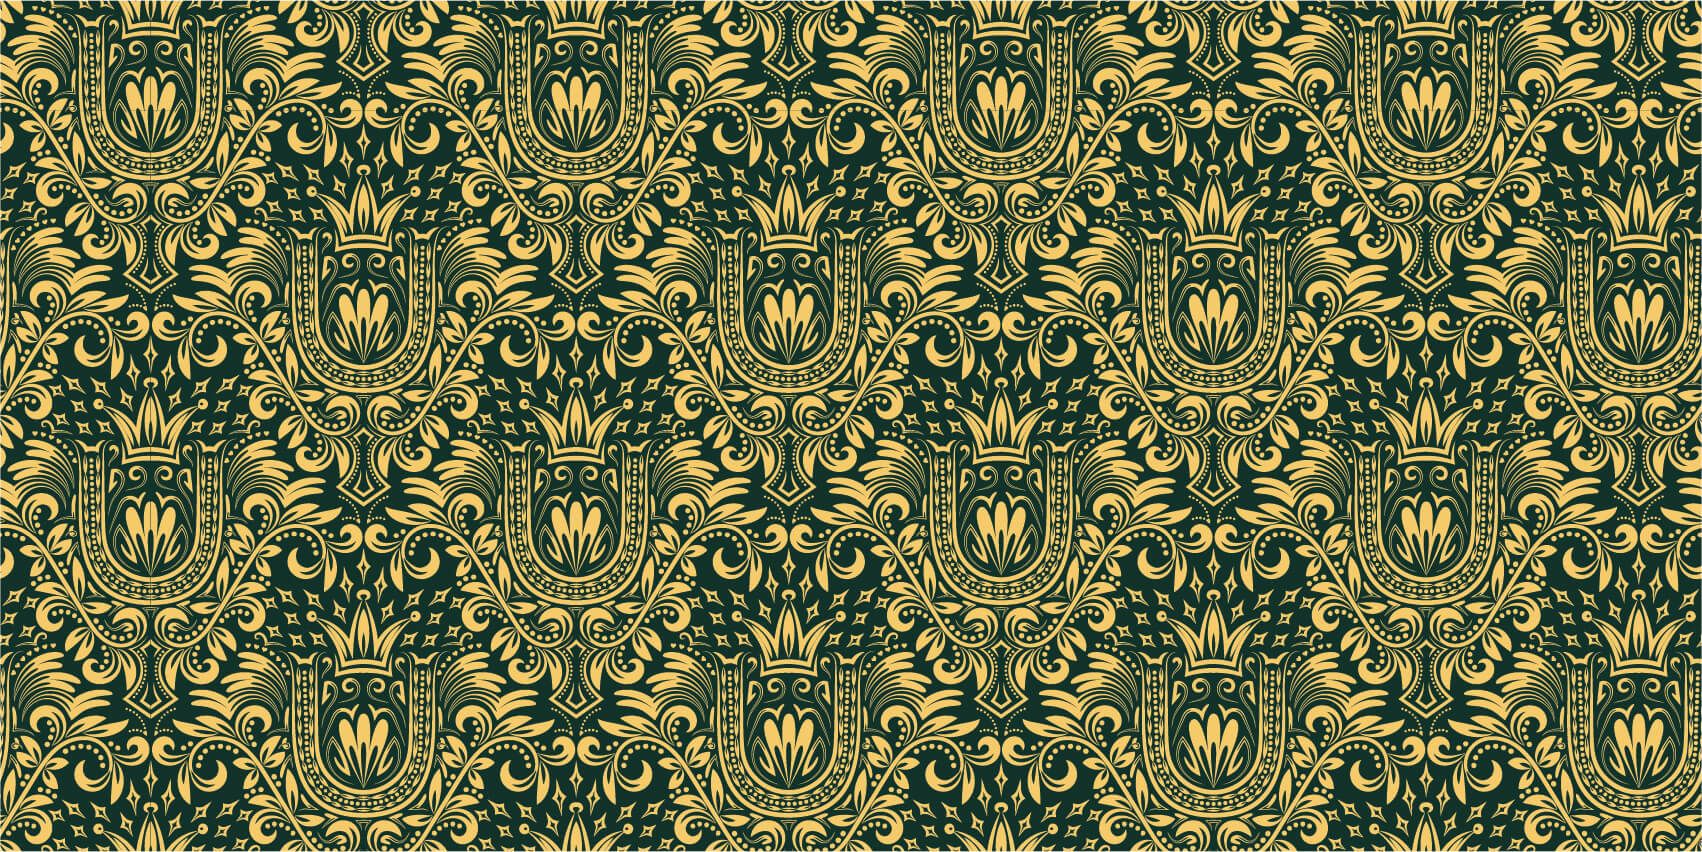 Barok behang - Groen barok patroon - Slaapkamer